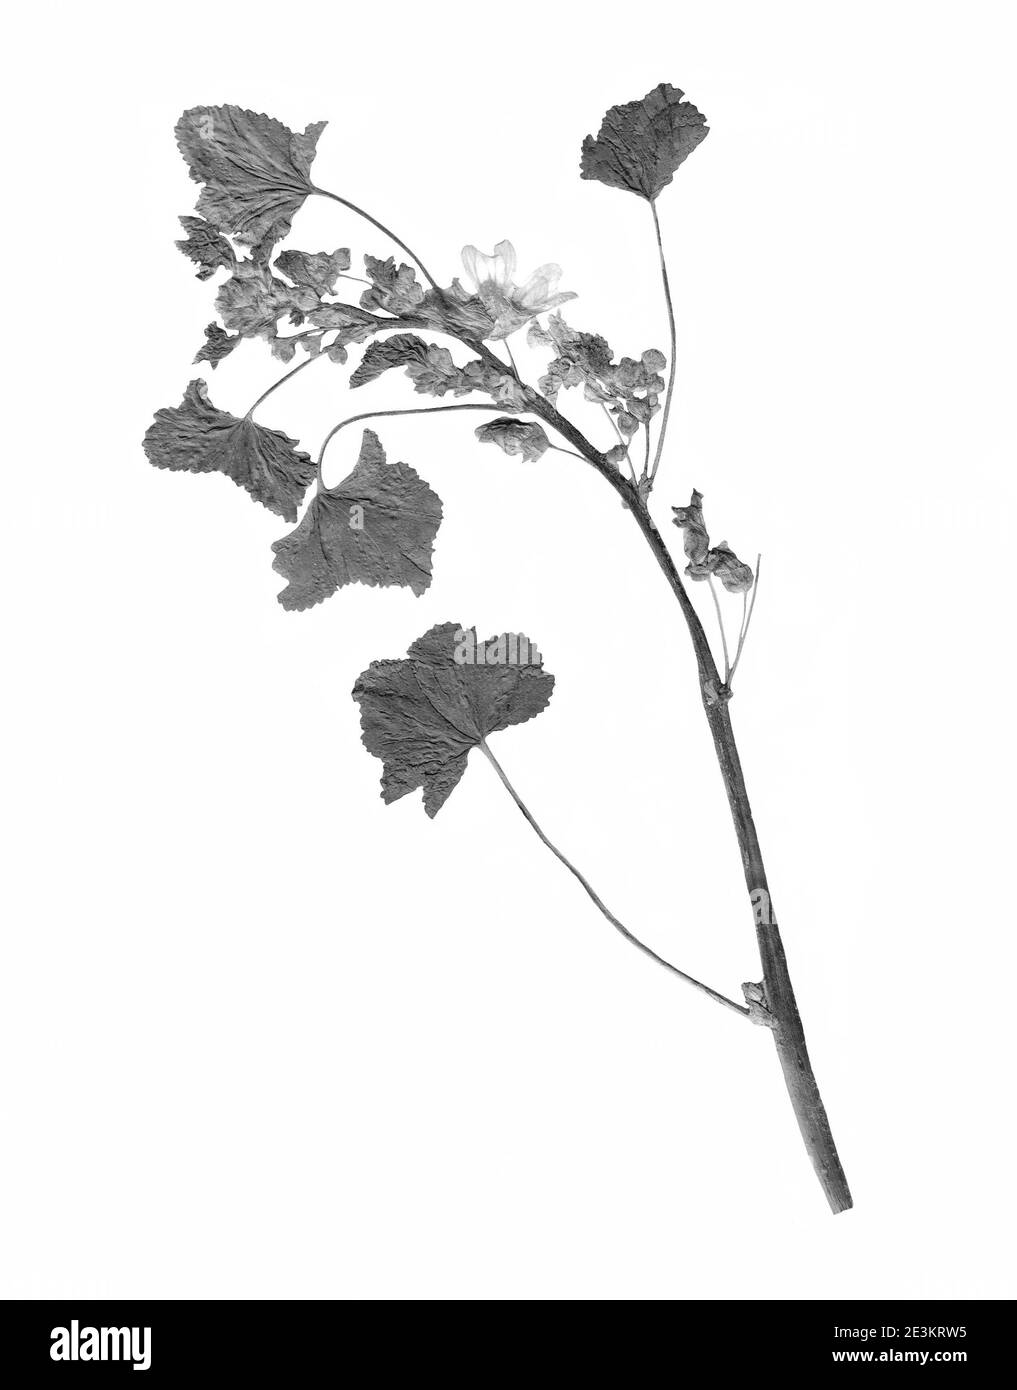 Herbarium with dry pressed plants on white background. Malva silvestris. Stock Photo